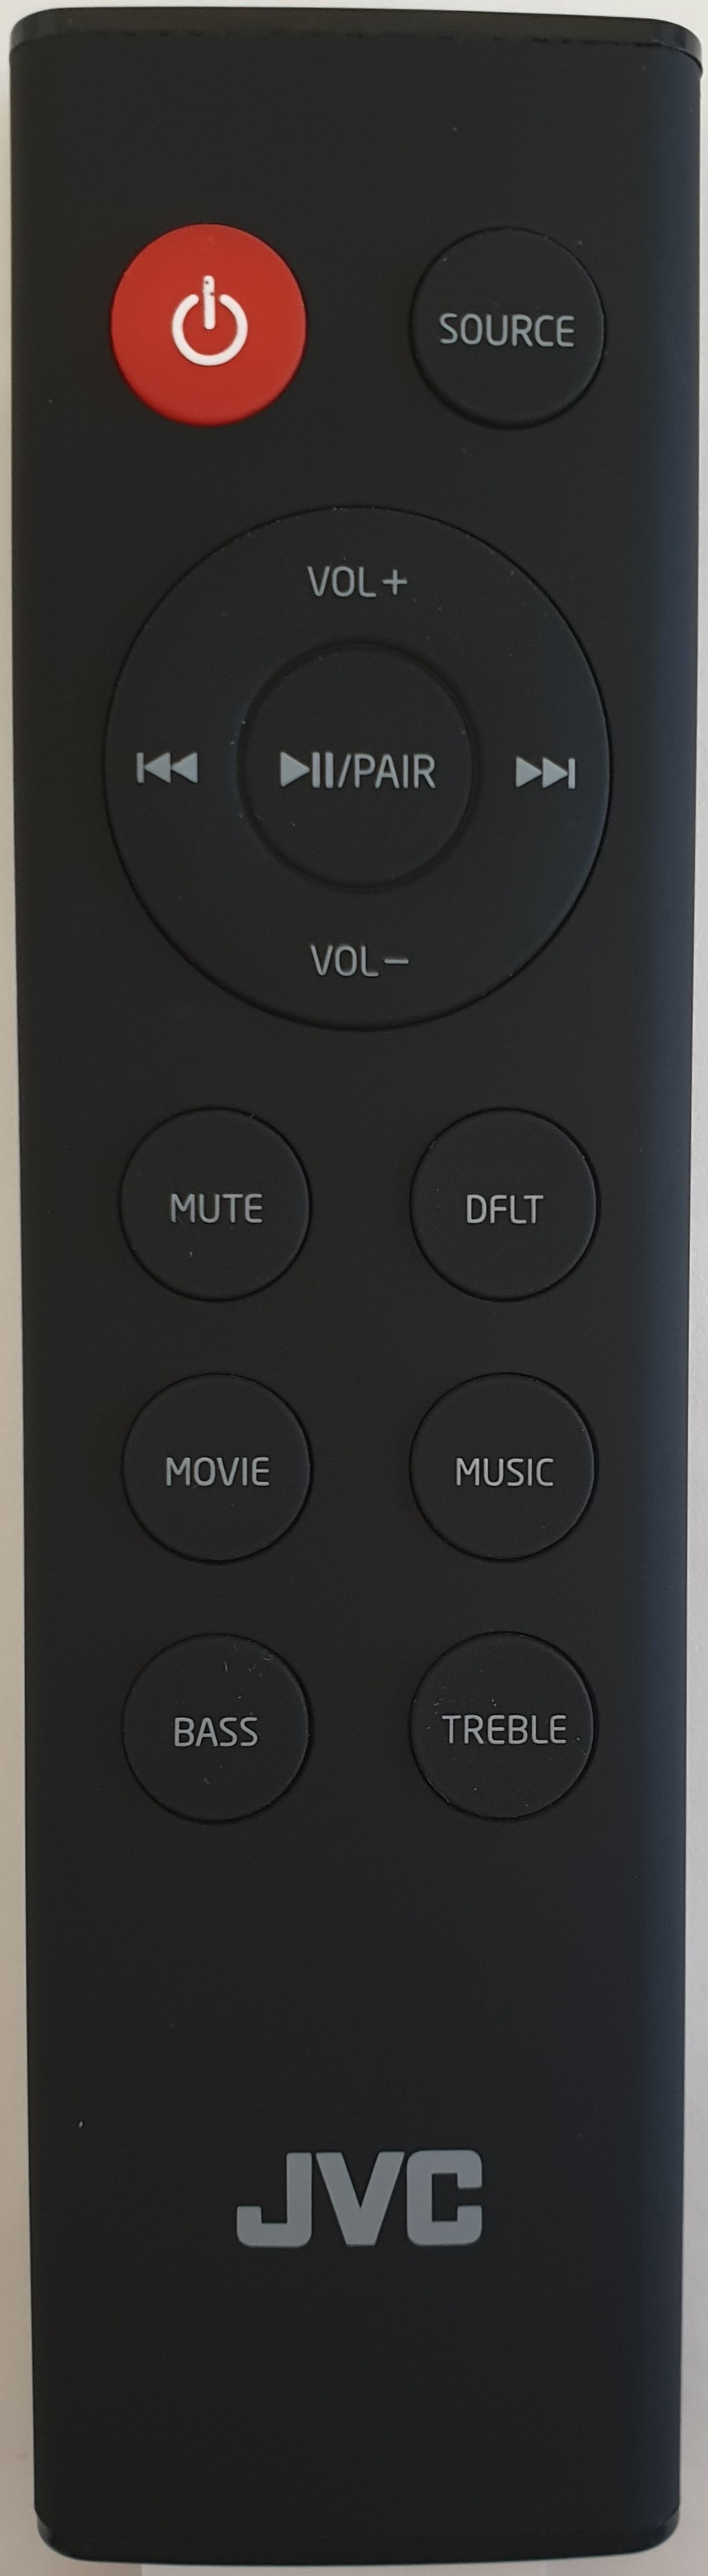 JVC RM-STHD337 Remote Control Original